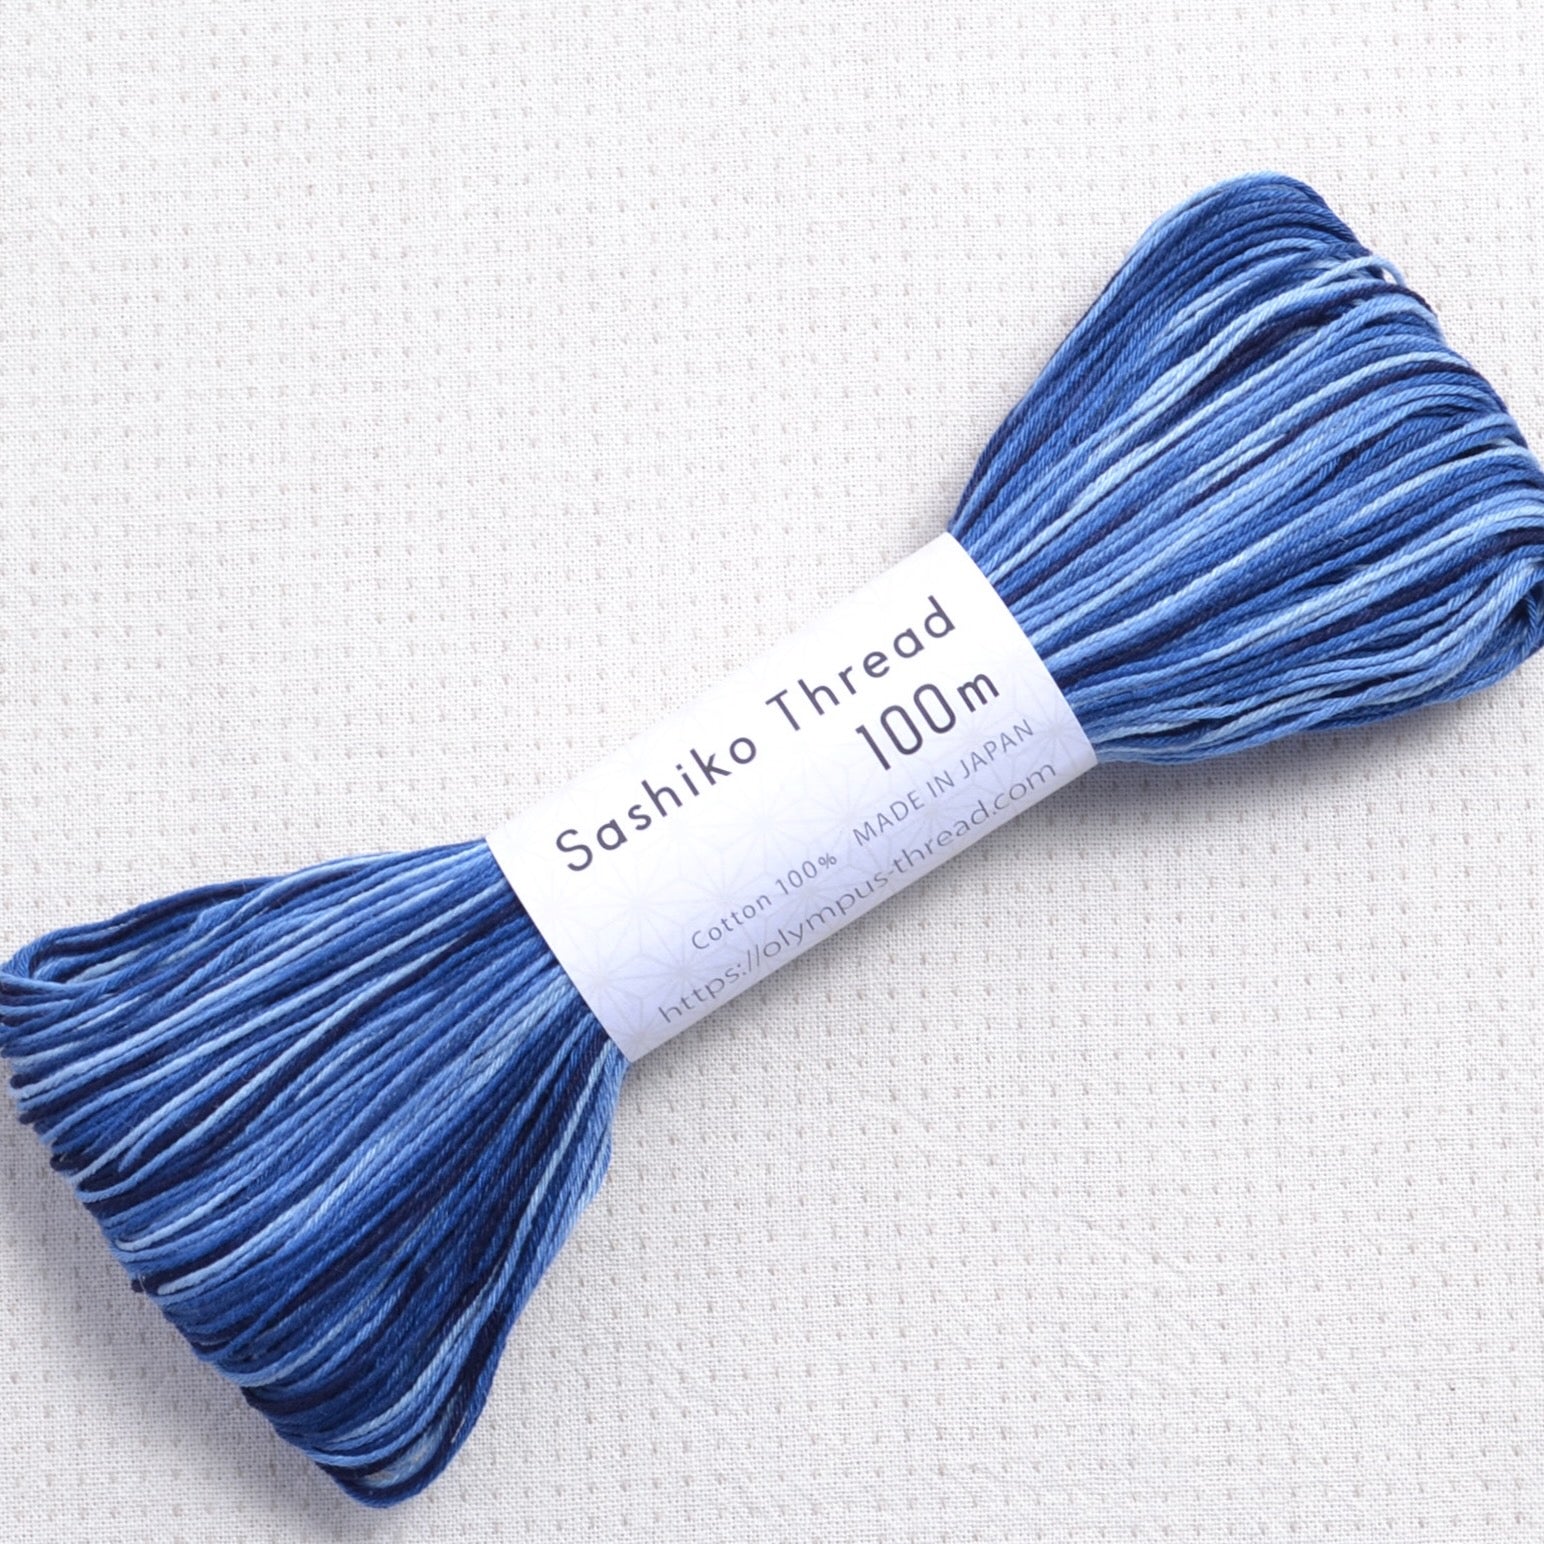 Olympus sashiko thread, 100 meter skein, variegated blues #157